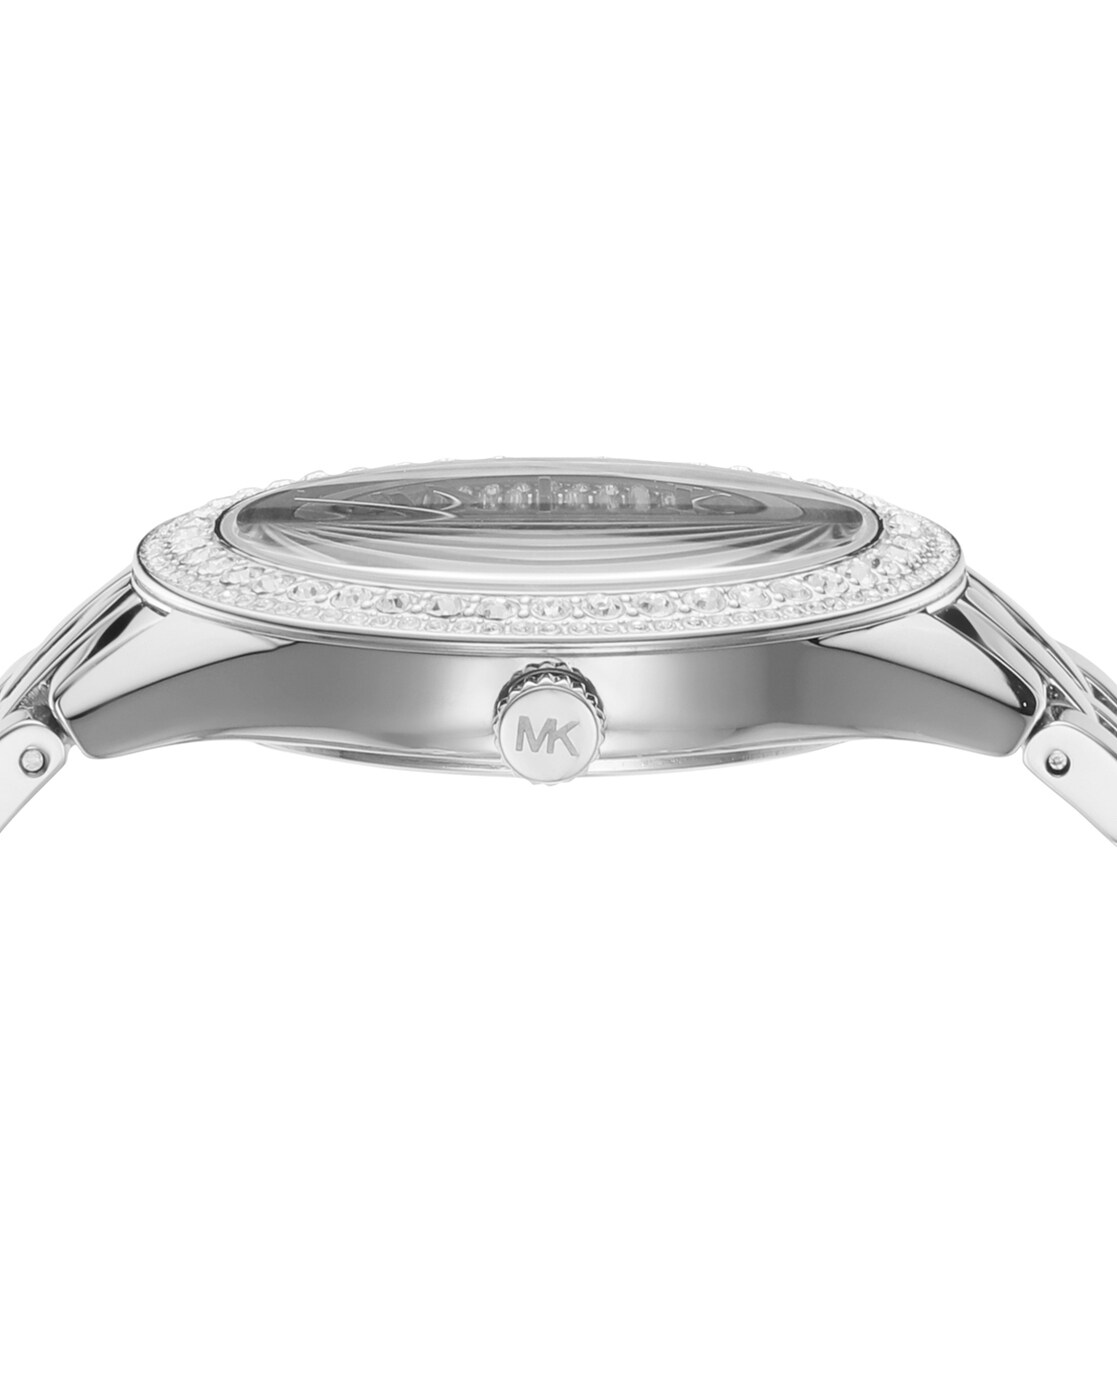 Buy Michael Kors MK4708 Harlowe Watch with Stainless Steel Strap